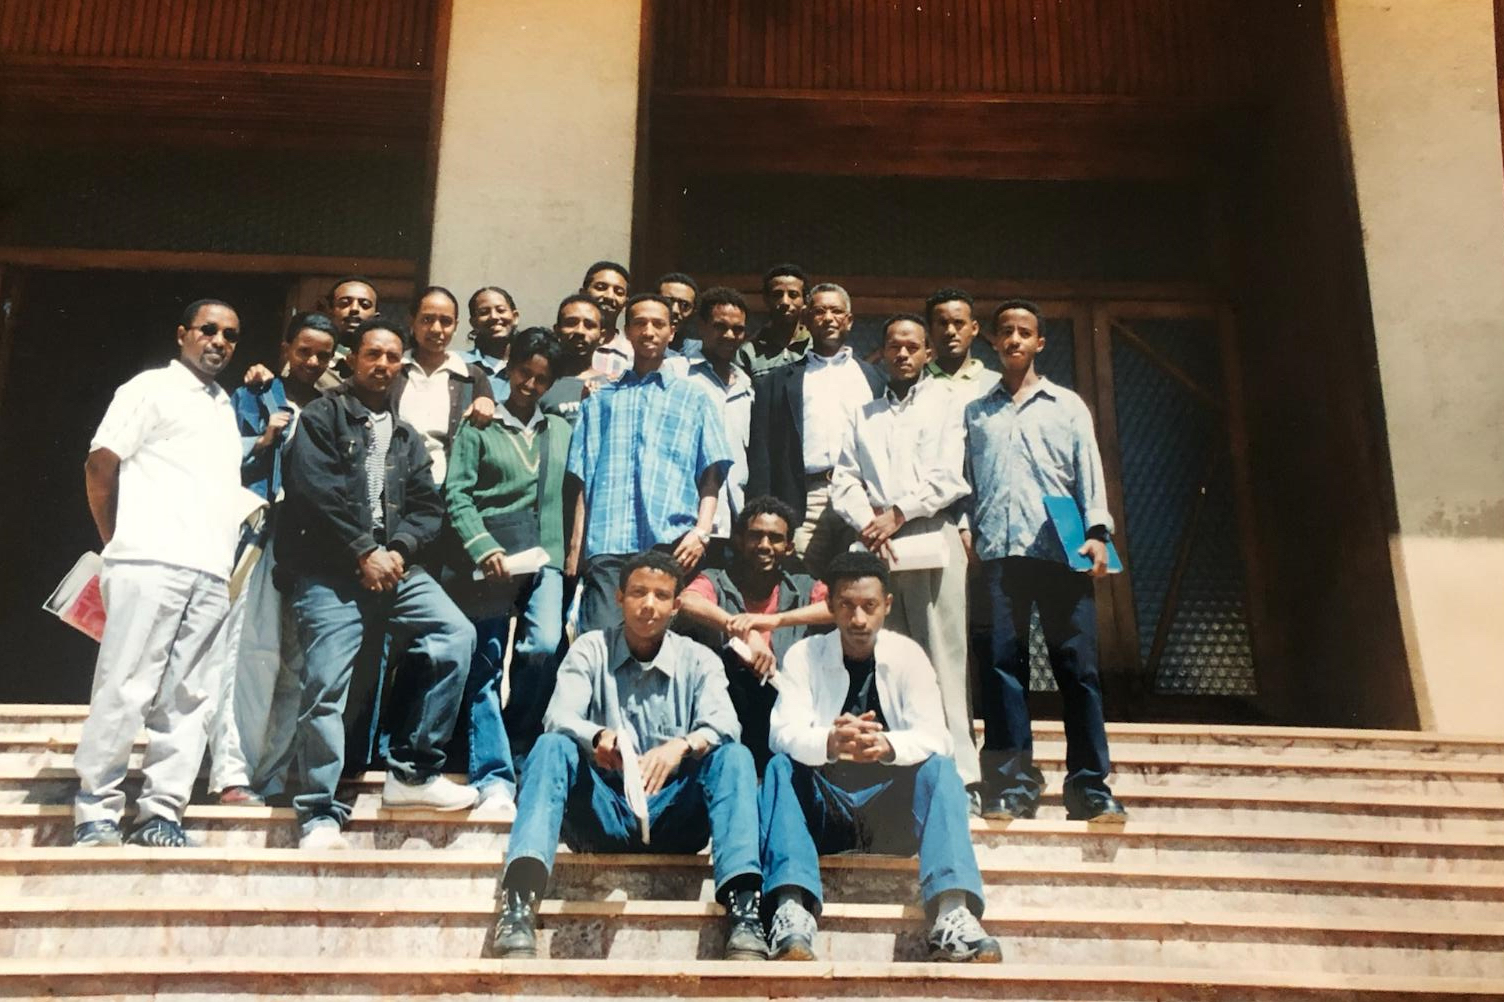 Ghirmai Negash with his class of journalism students at the University of Asmara, 2001-02